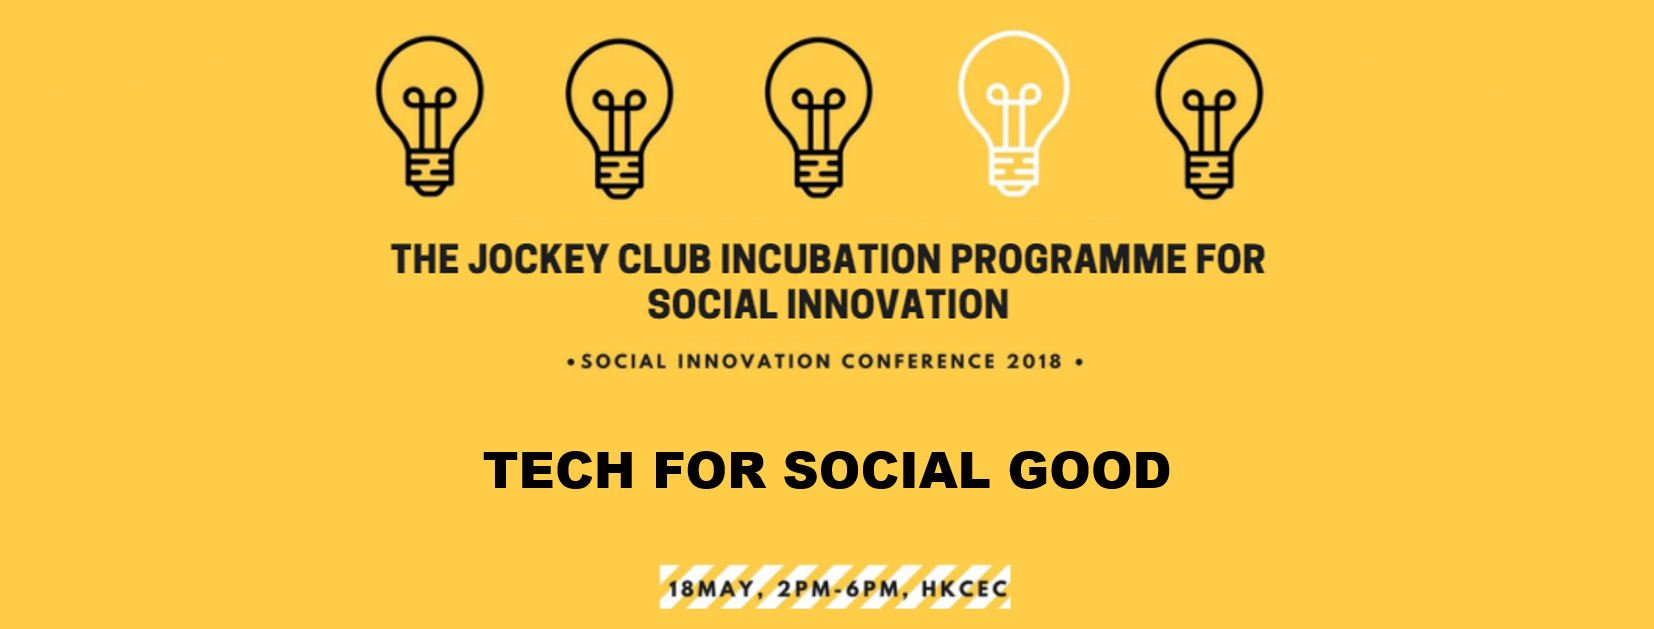 Social Innovation Conference 2018